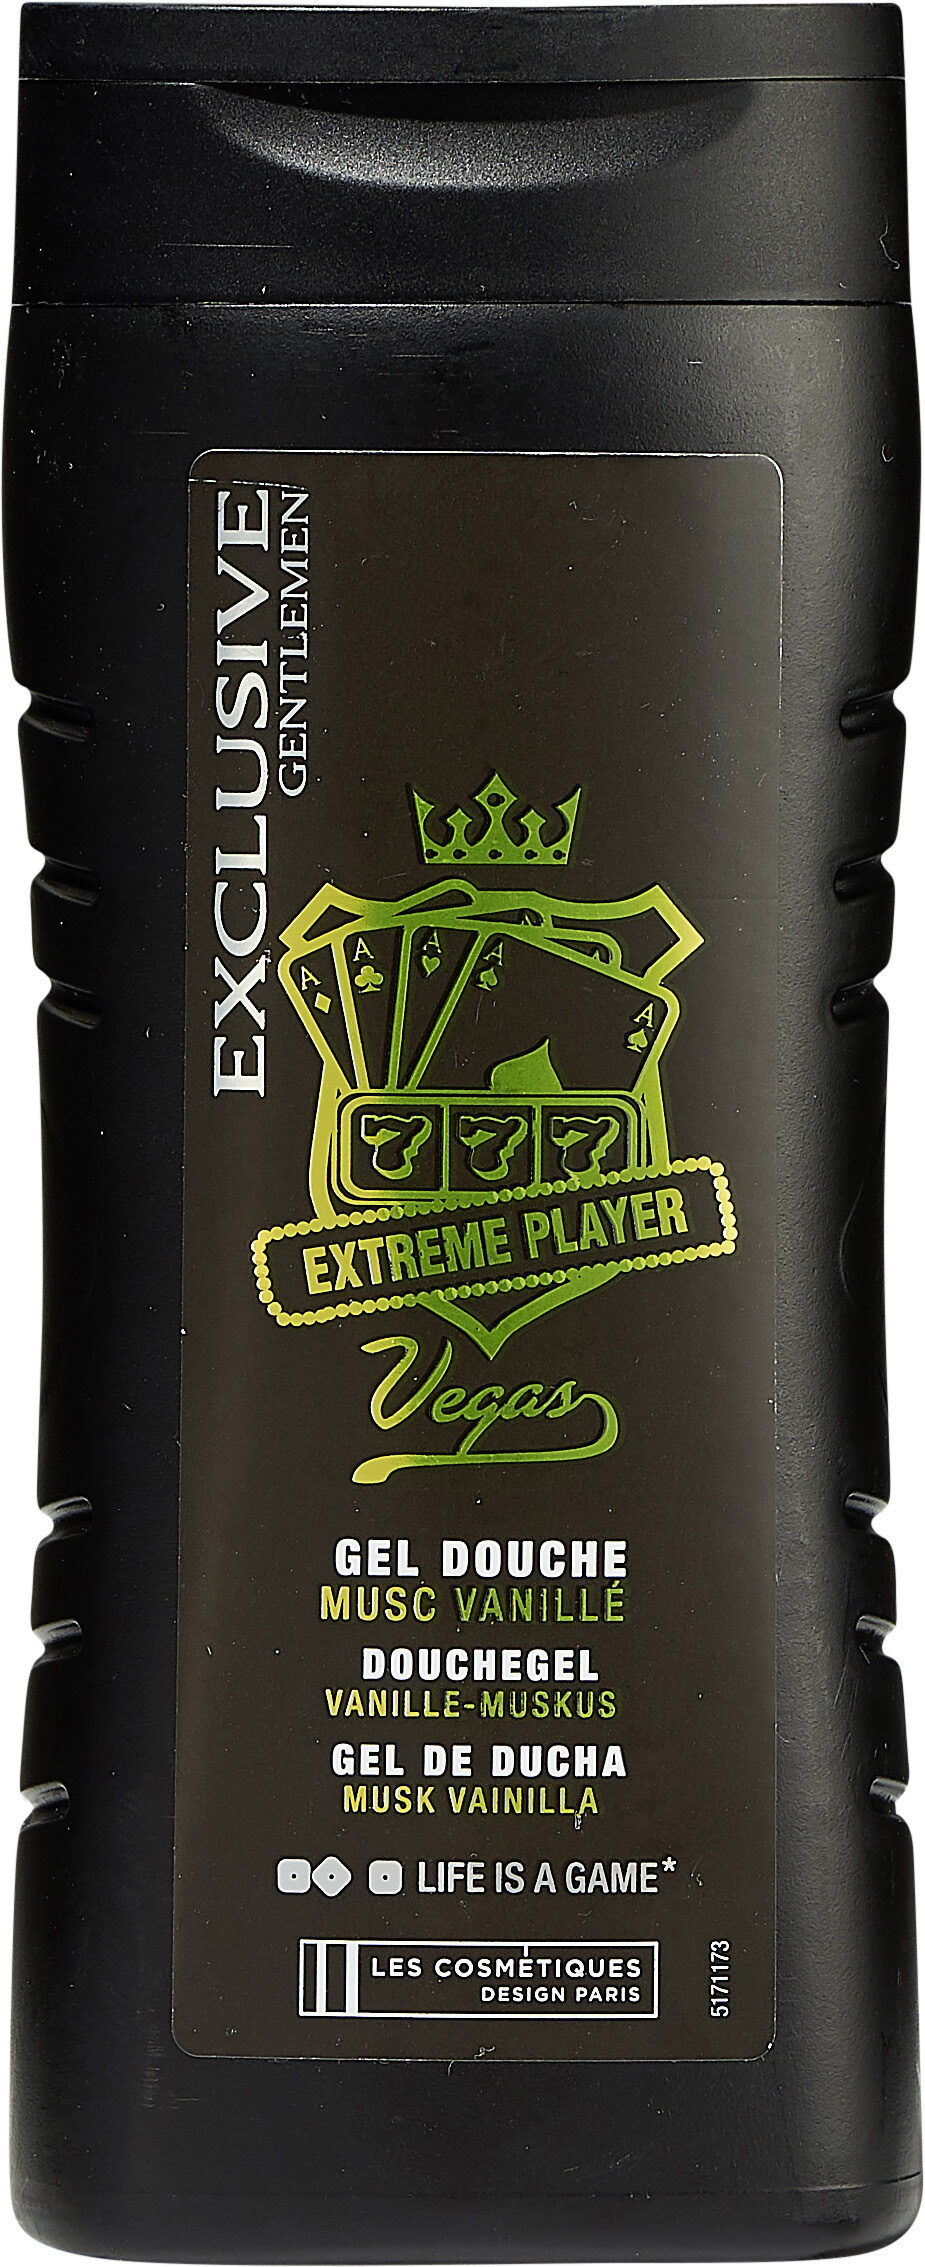 Exclusive Gentlemen Extreme Player Vegas Gel douche musc vanillé - Product - fr